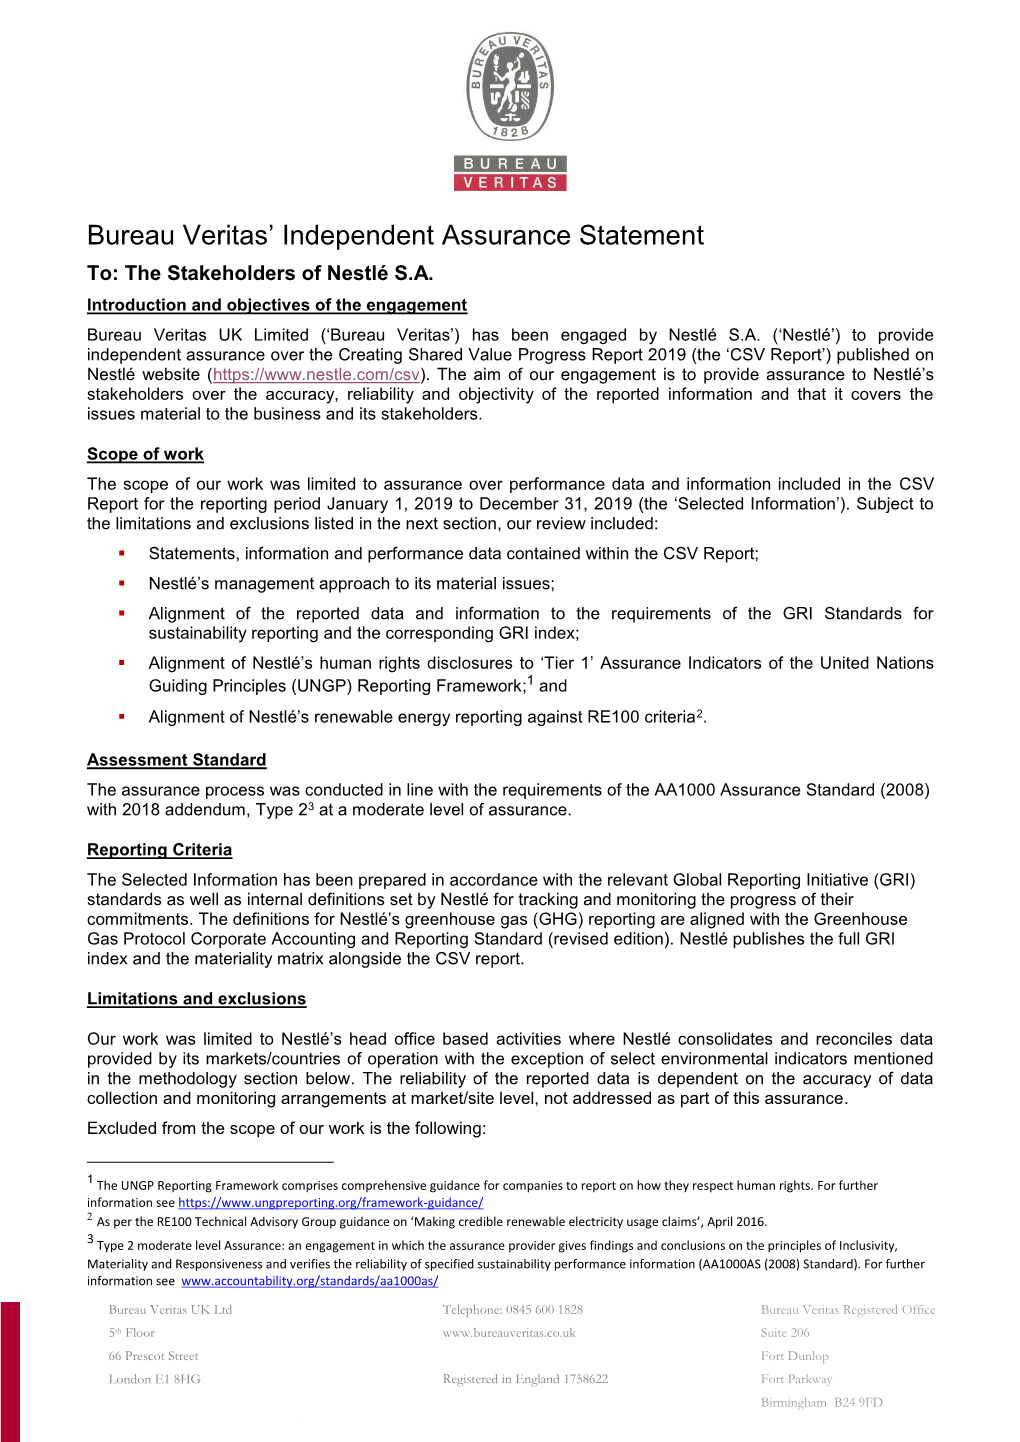 Bureau Veritas' Independent Assurance Statement 2020